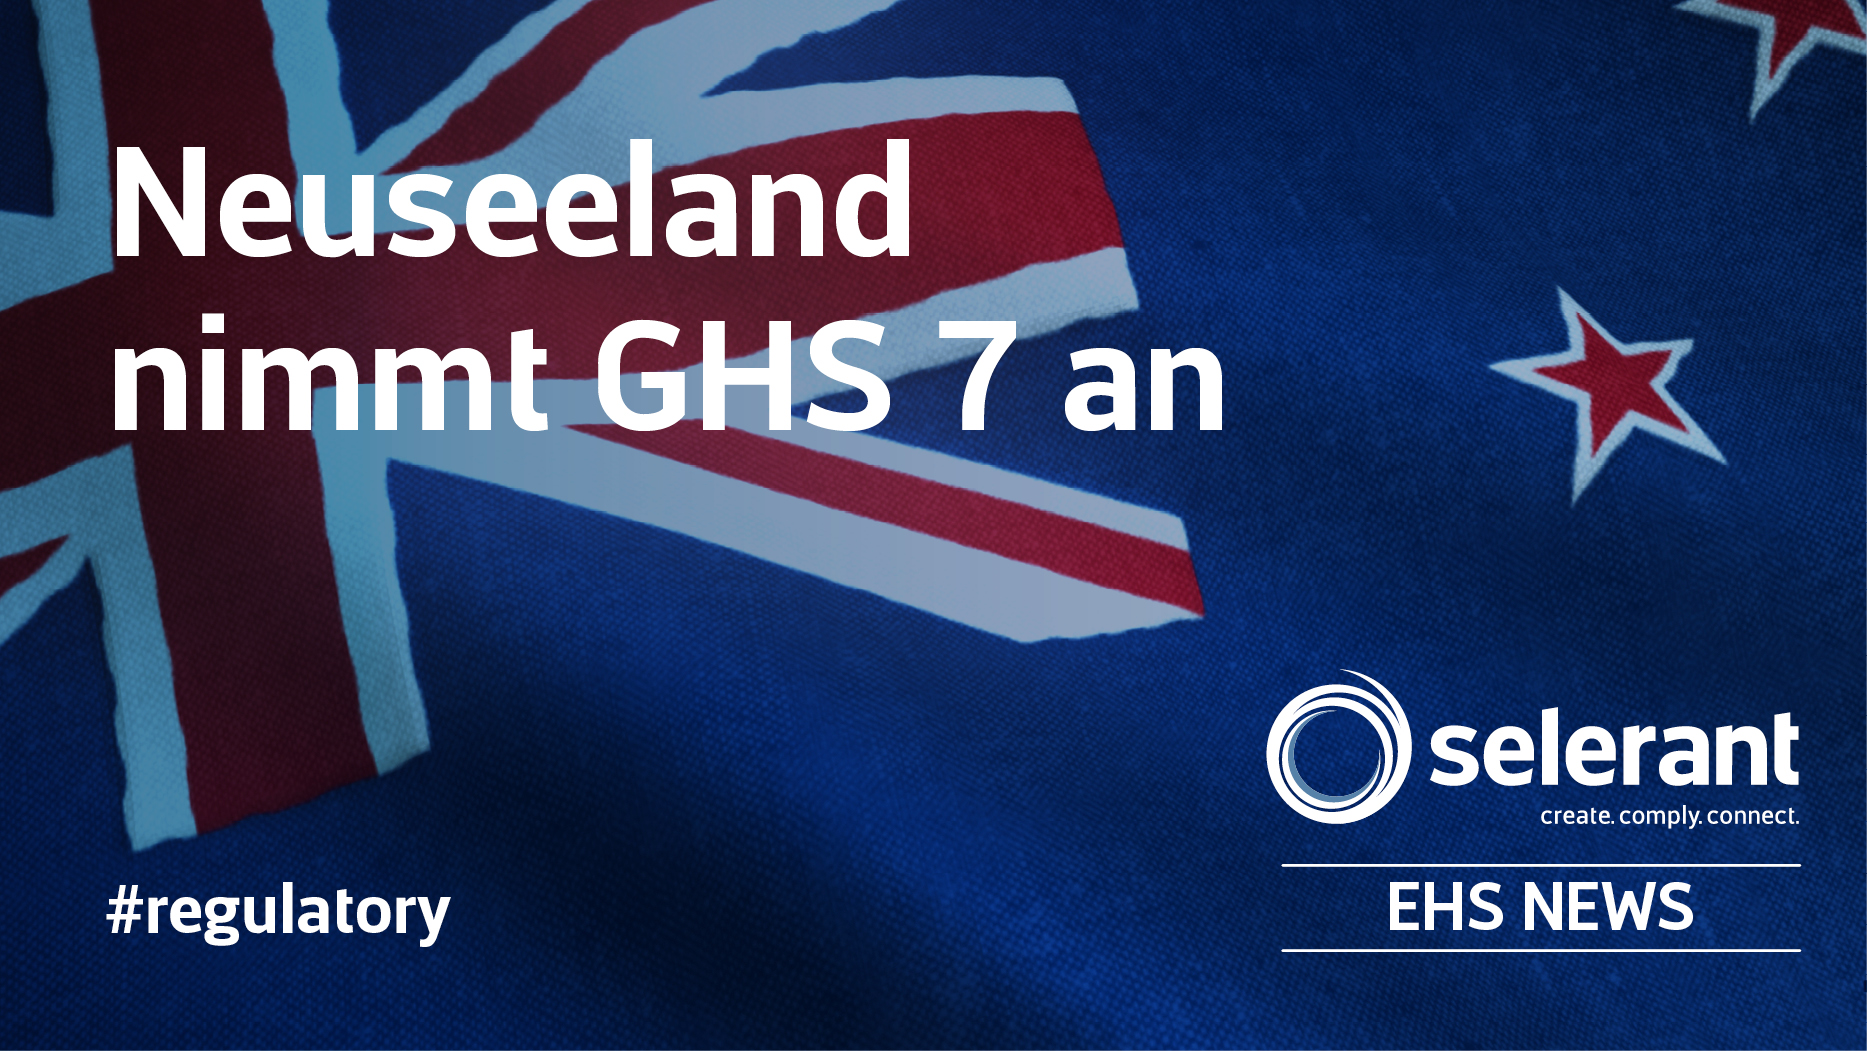 Neuseeland nimmt GHS 7 an